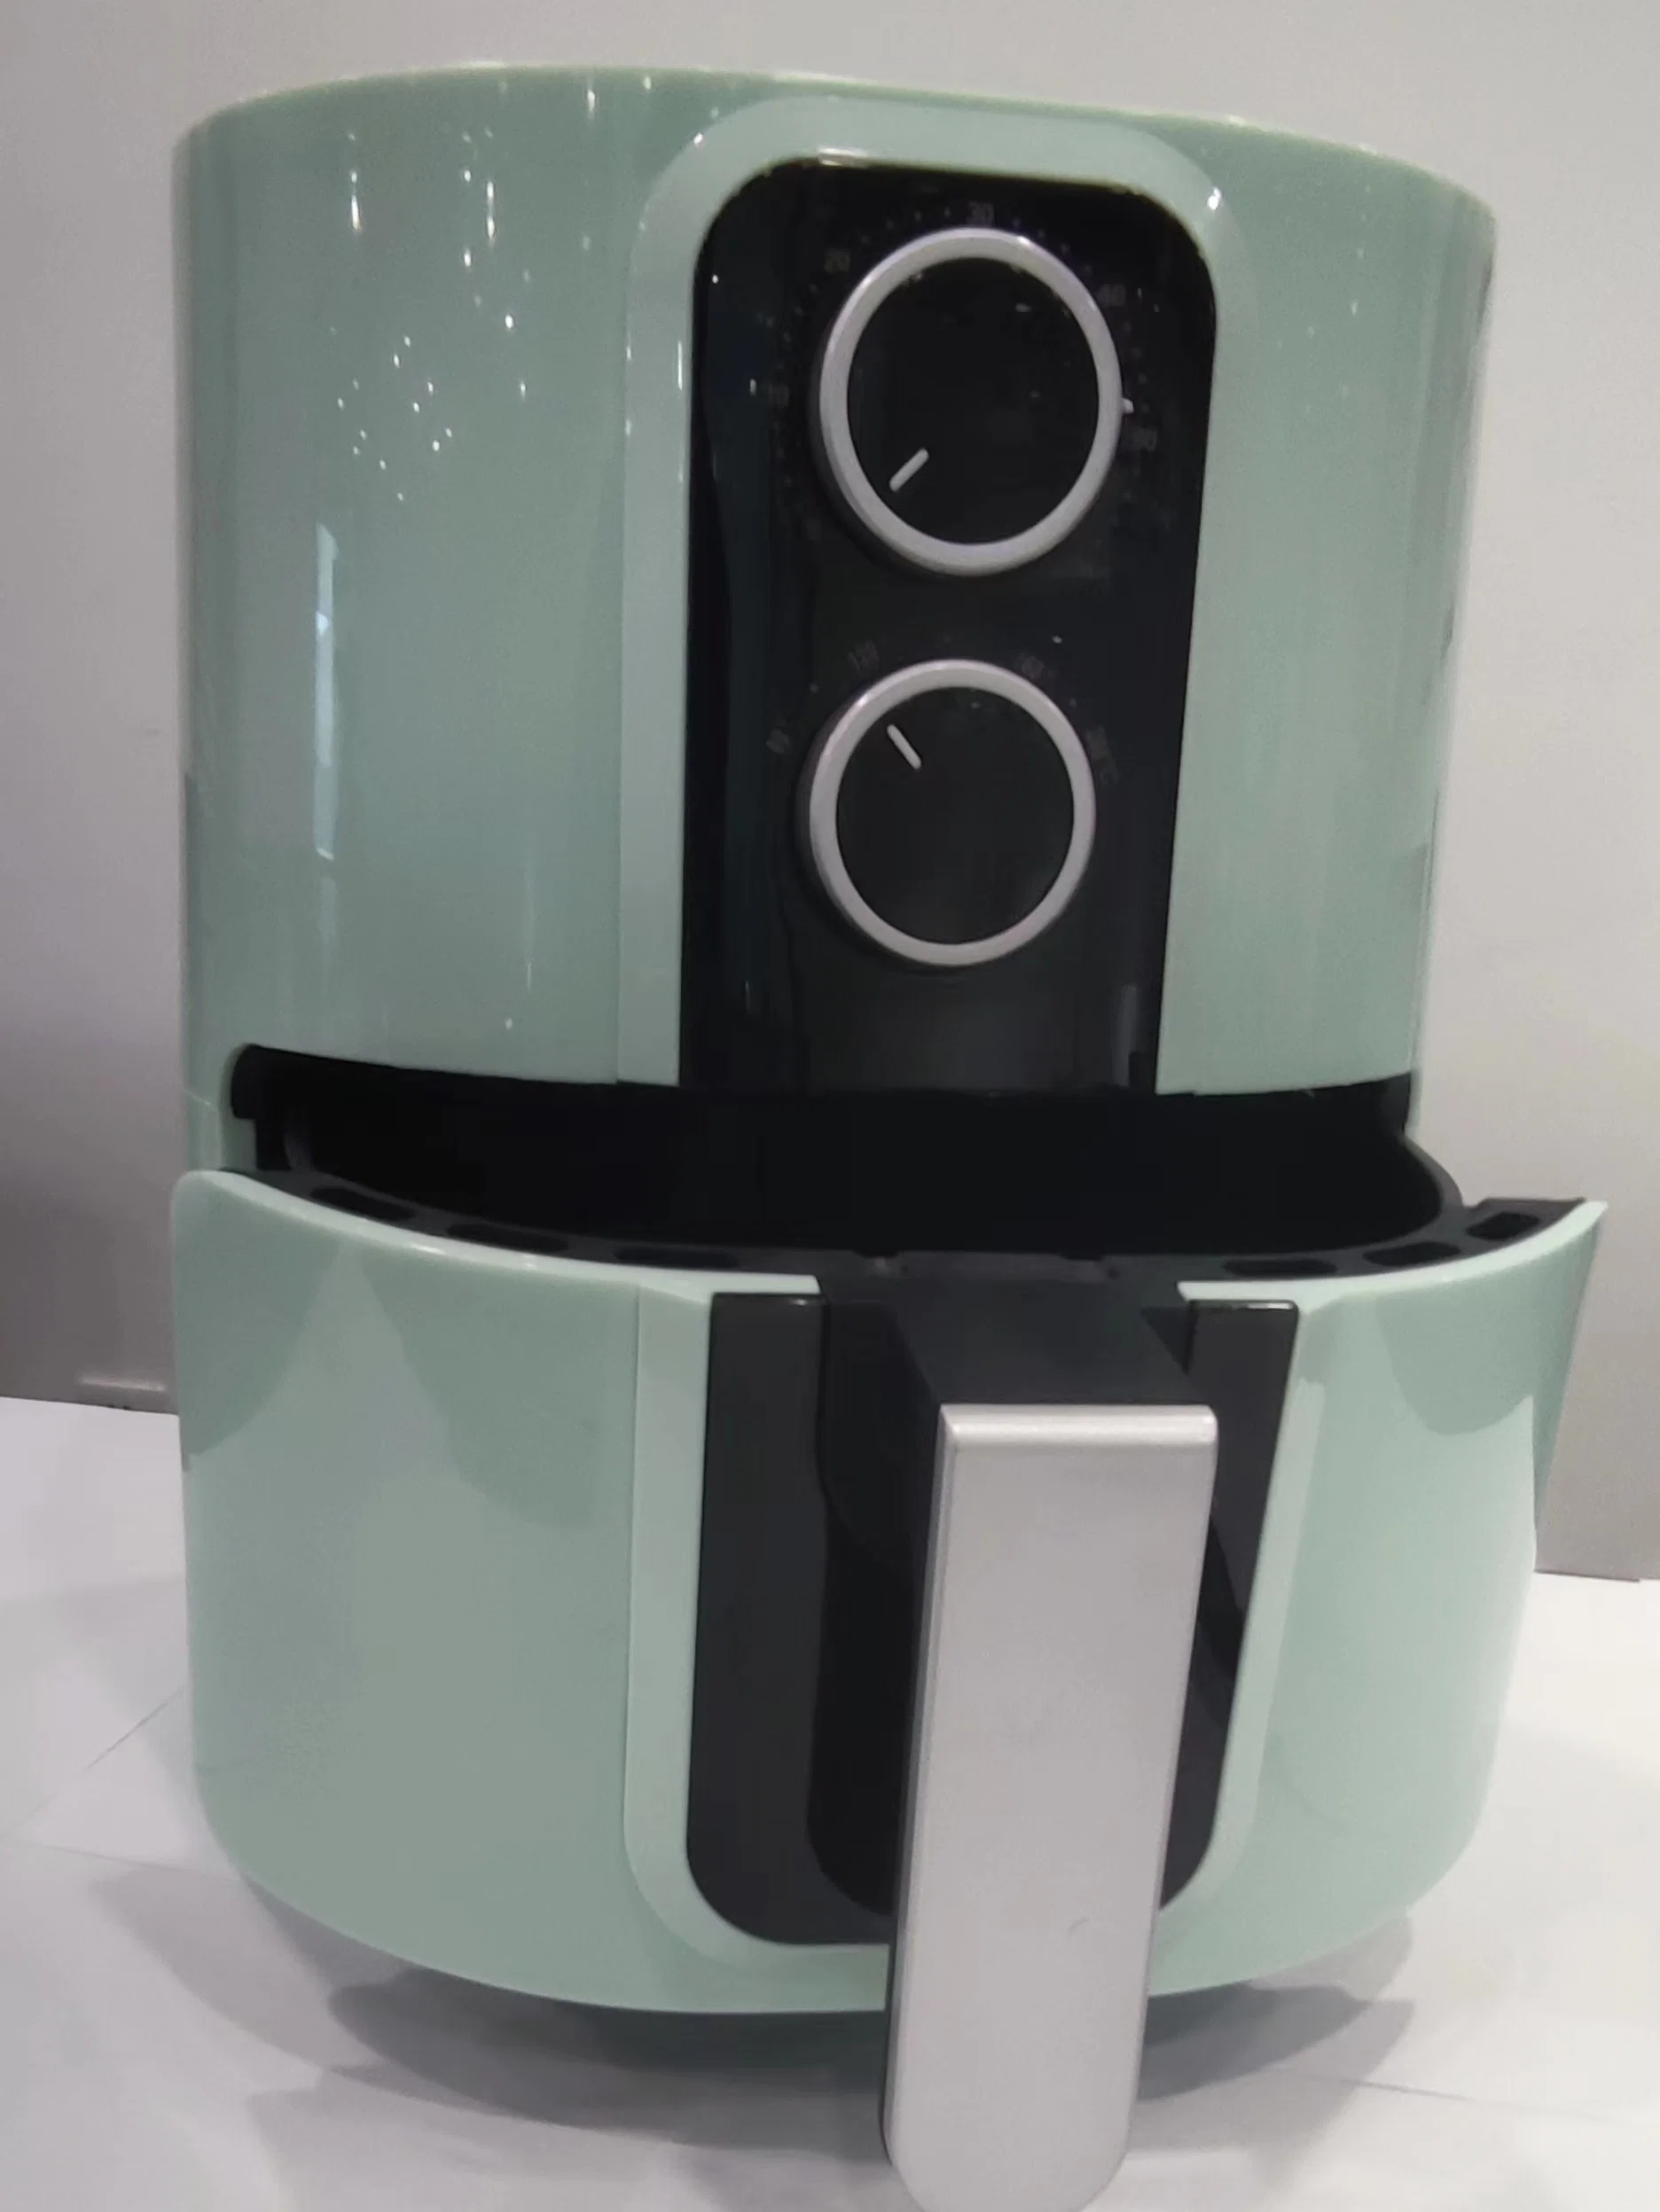 Air Fryer Kitchen Appliances Disposable Paper Liner Hot Electric Air Fryer